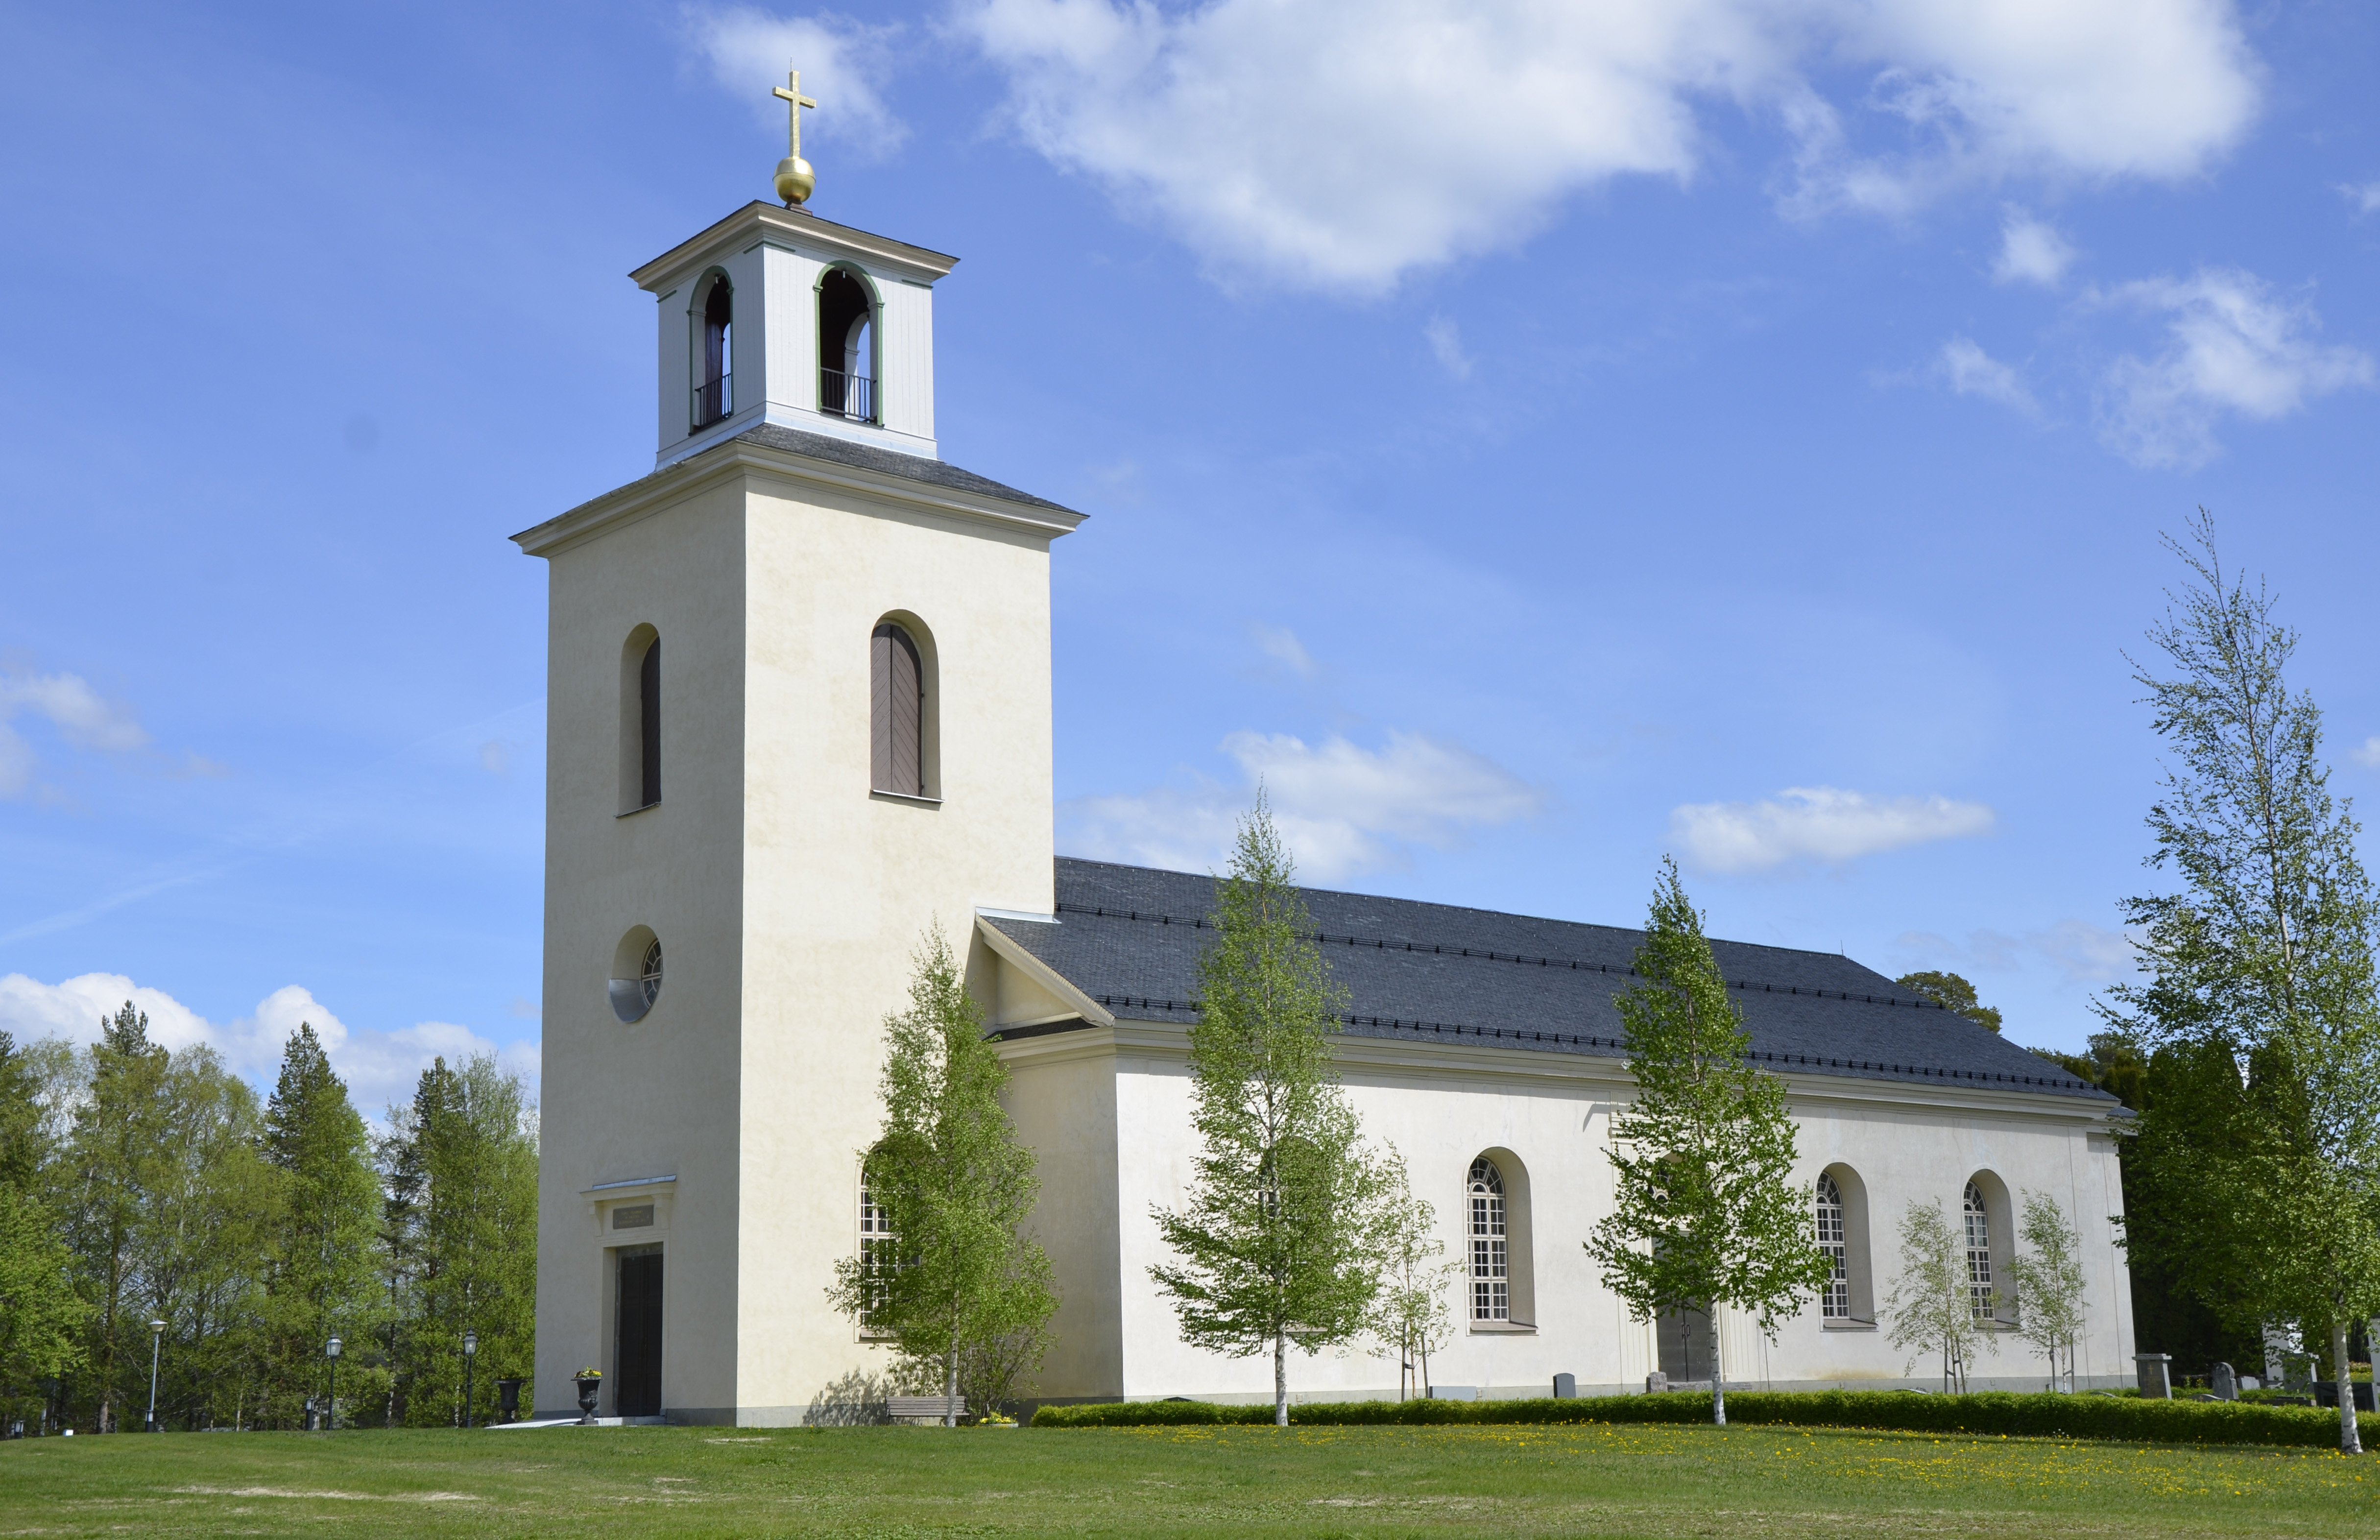 Sunne kyrka, Jämtland.